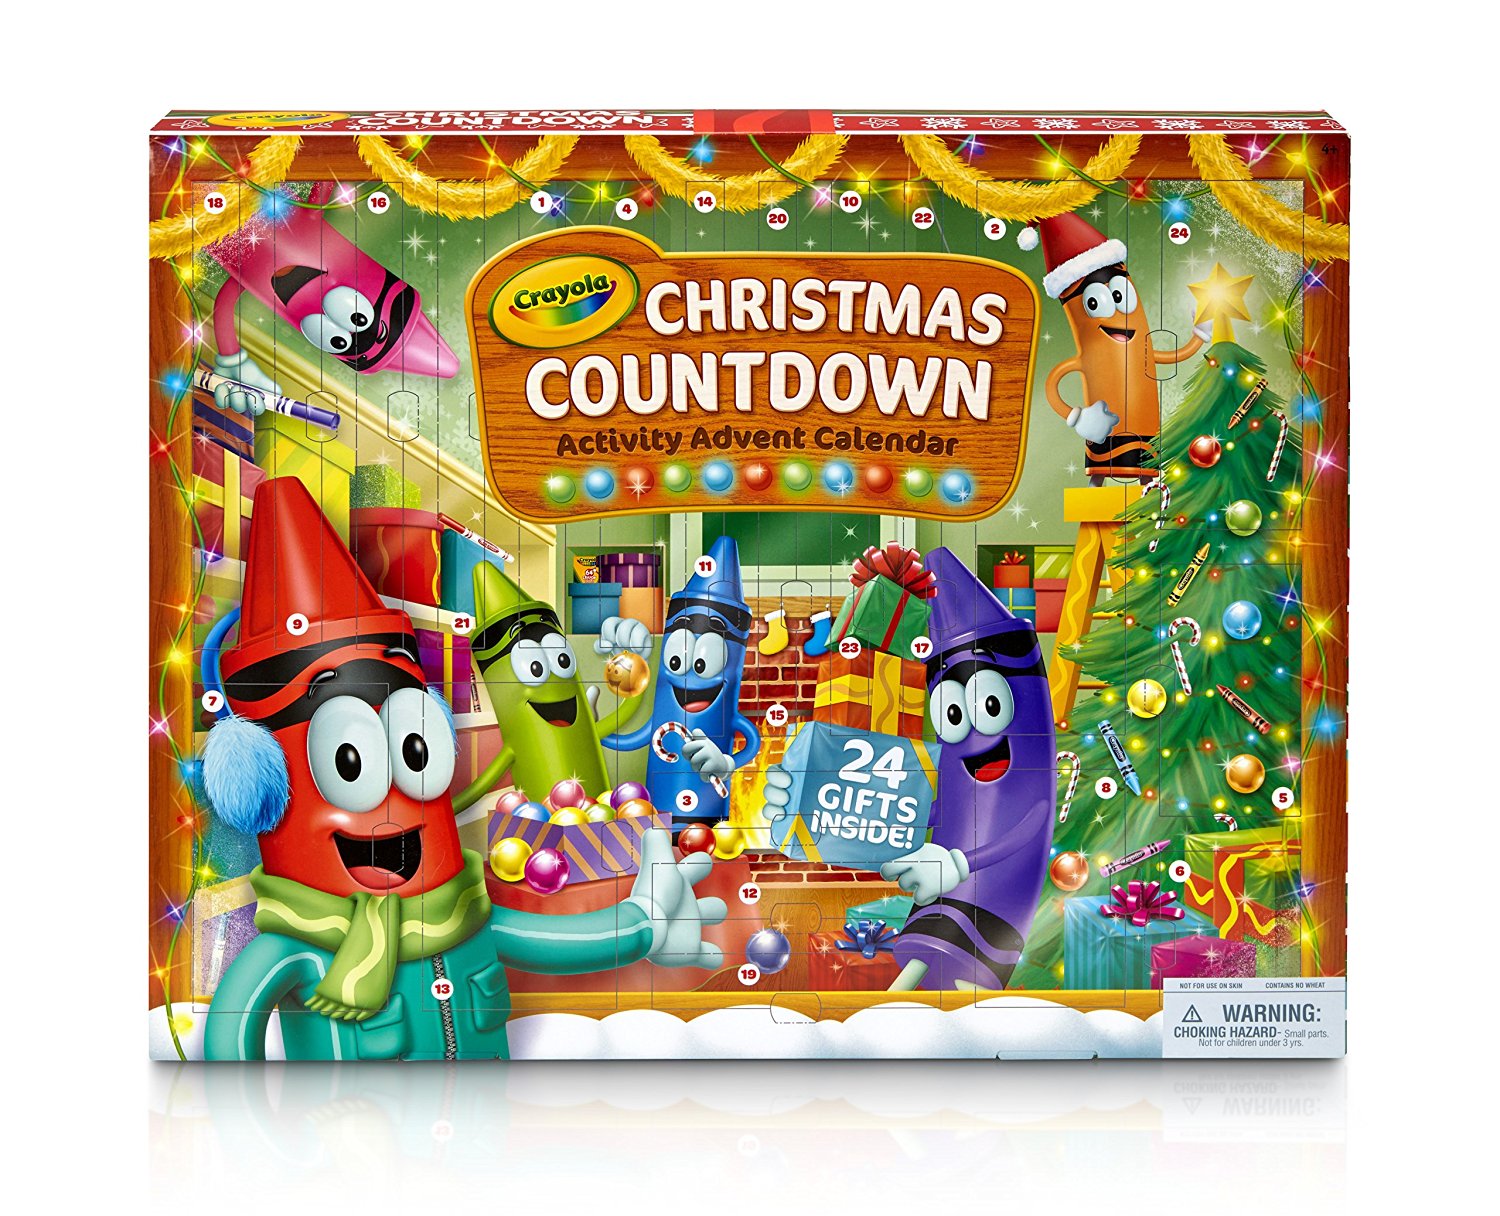 Crayola Christmas Countdown Activity Advent Calendar – Just $19.49!